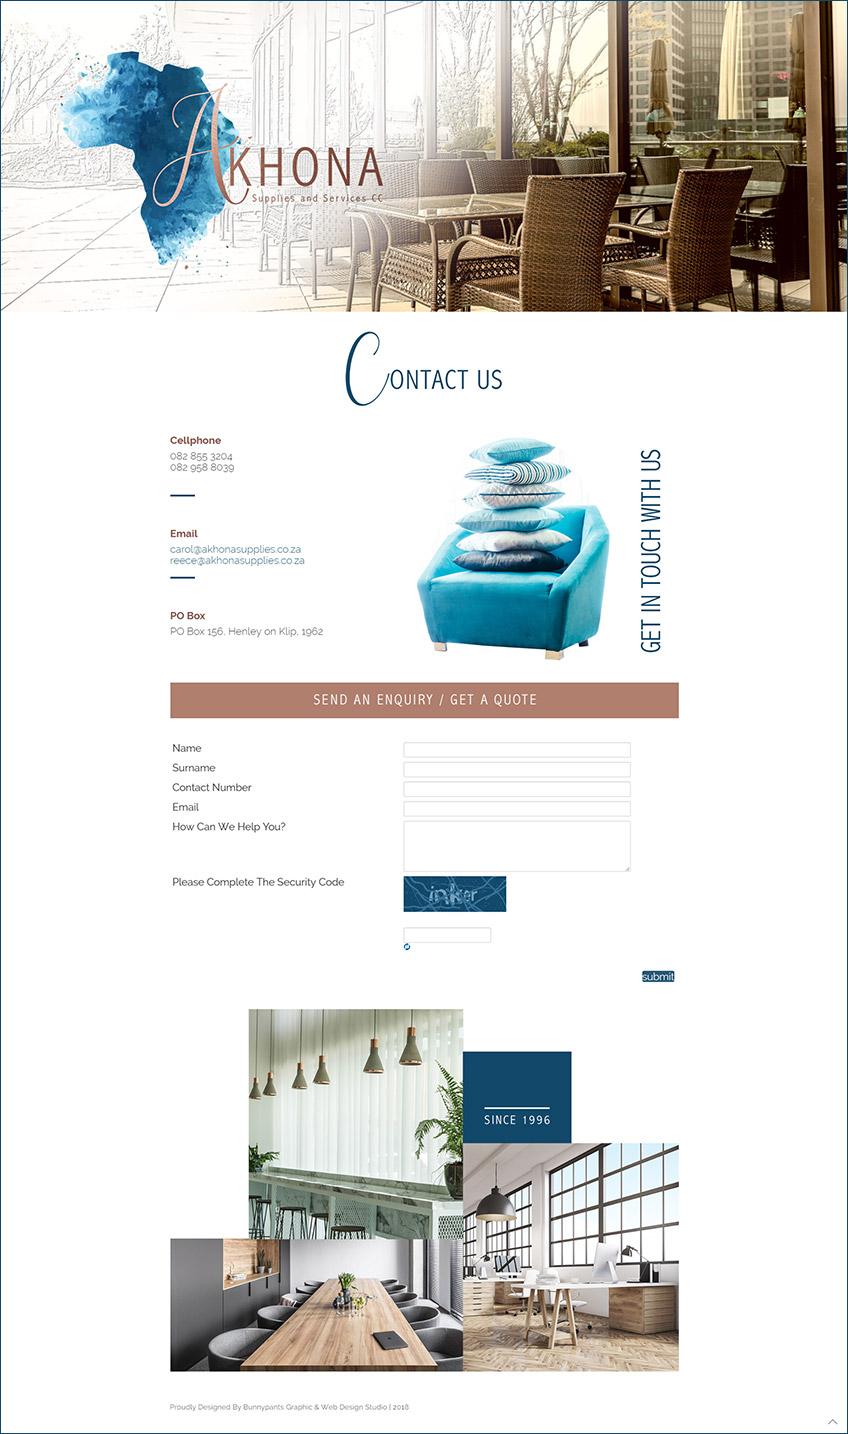 akhona web design contact